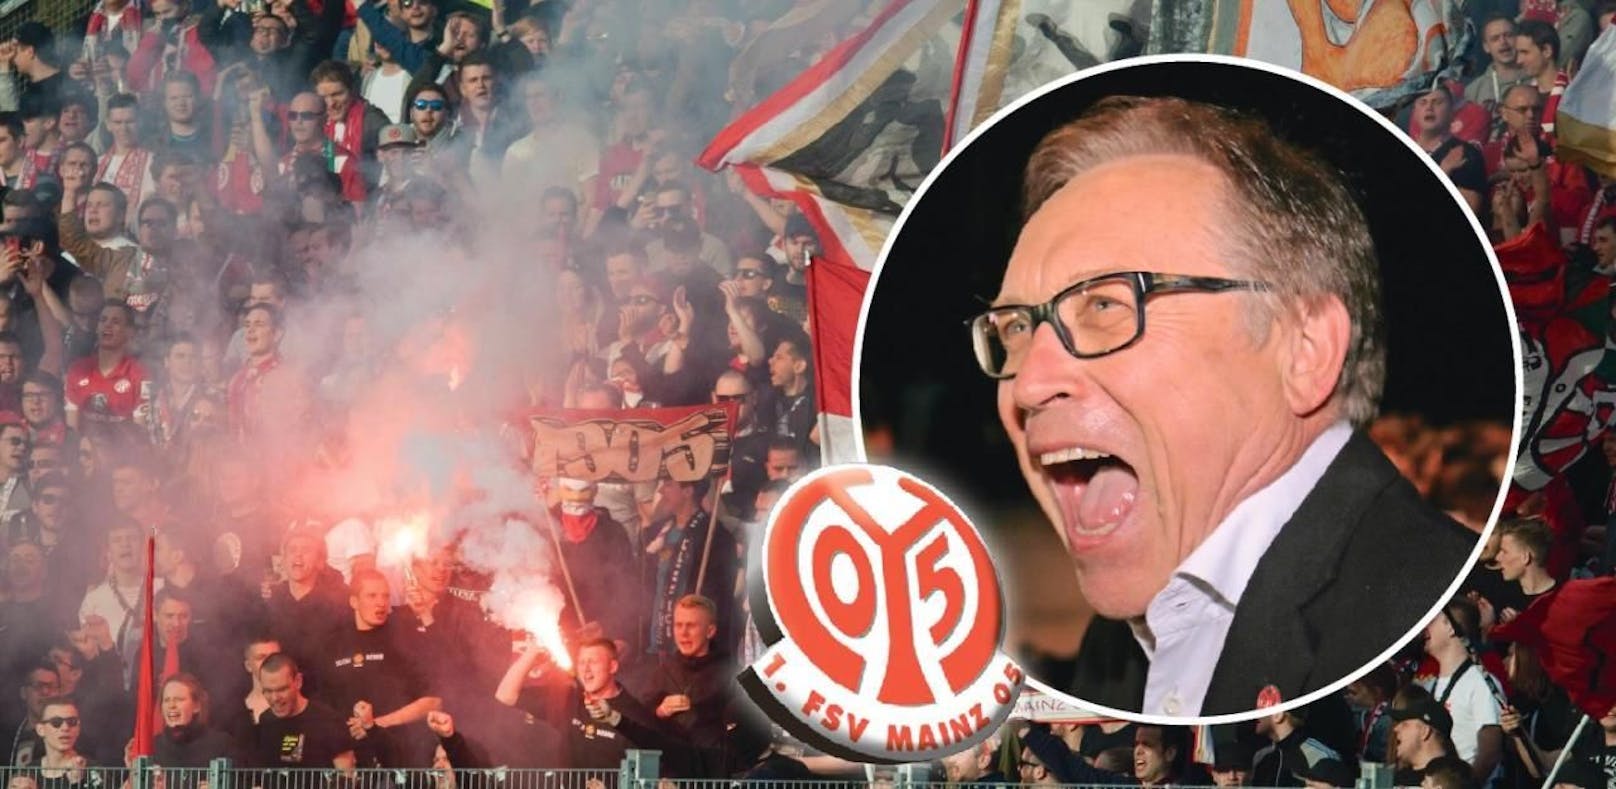 Revolution! Ultras küren in Mainz neuen Klubboss